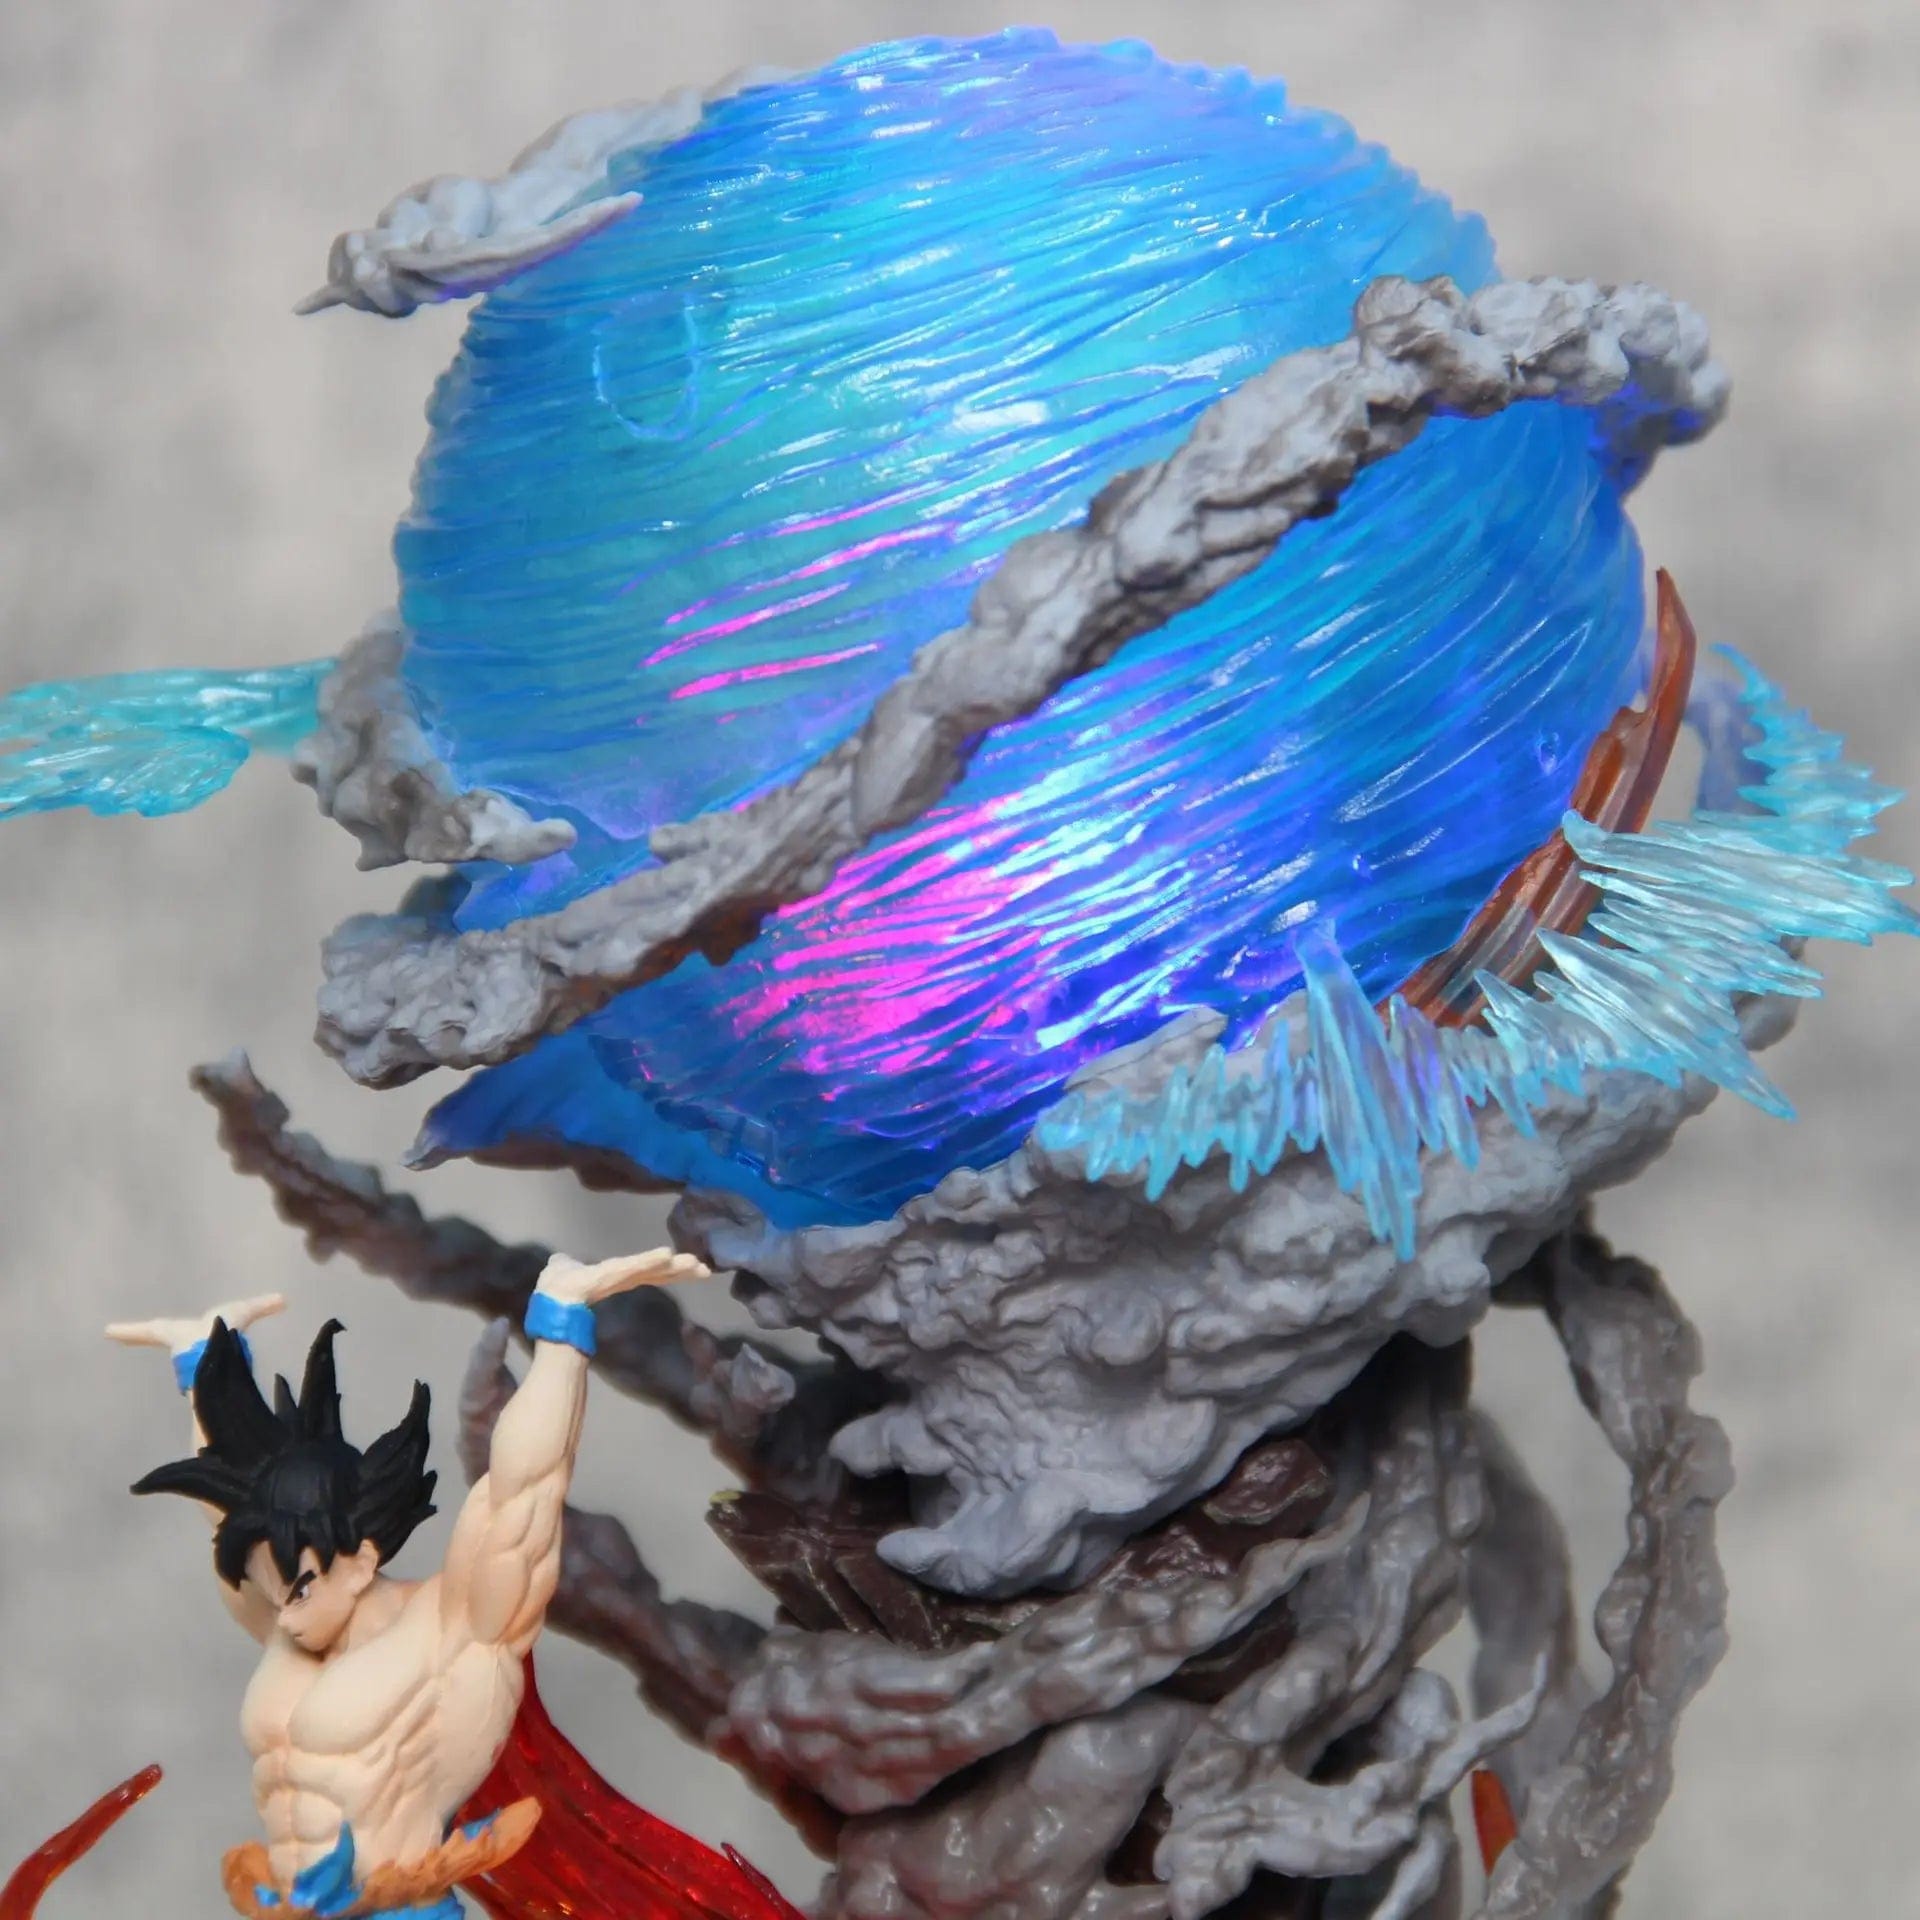 HomeBound Essentials NO BOX Super Spirit Bomb Goku Figure - 23cm Dragon Ball Son Goku Action Model Collection